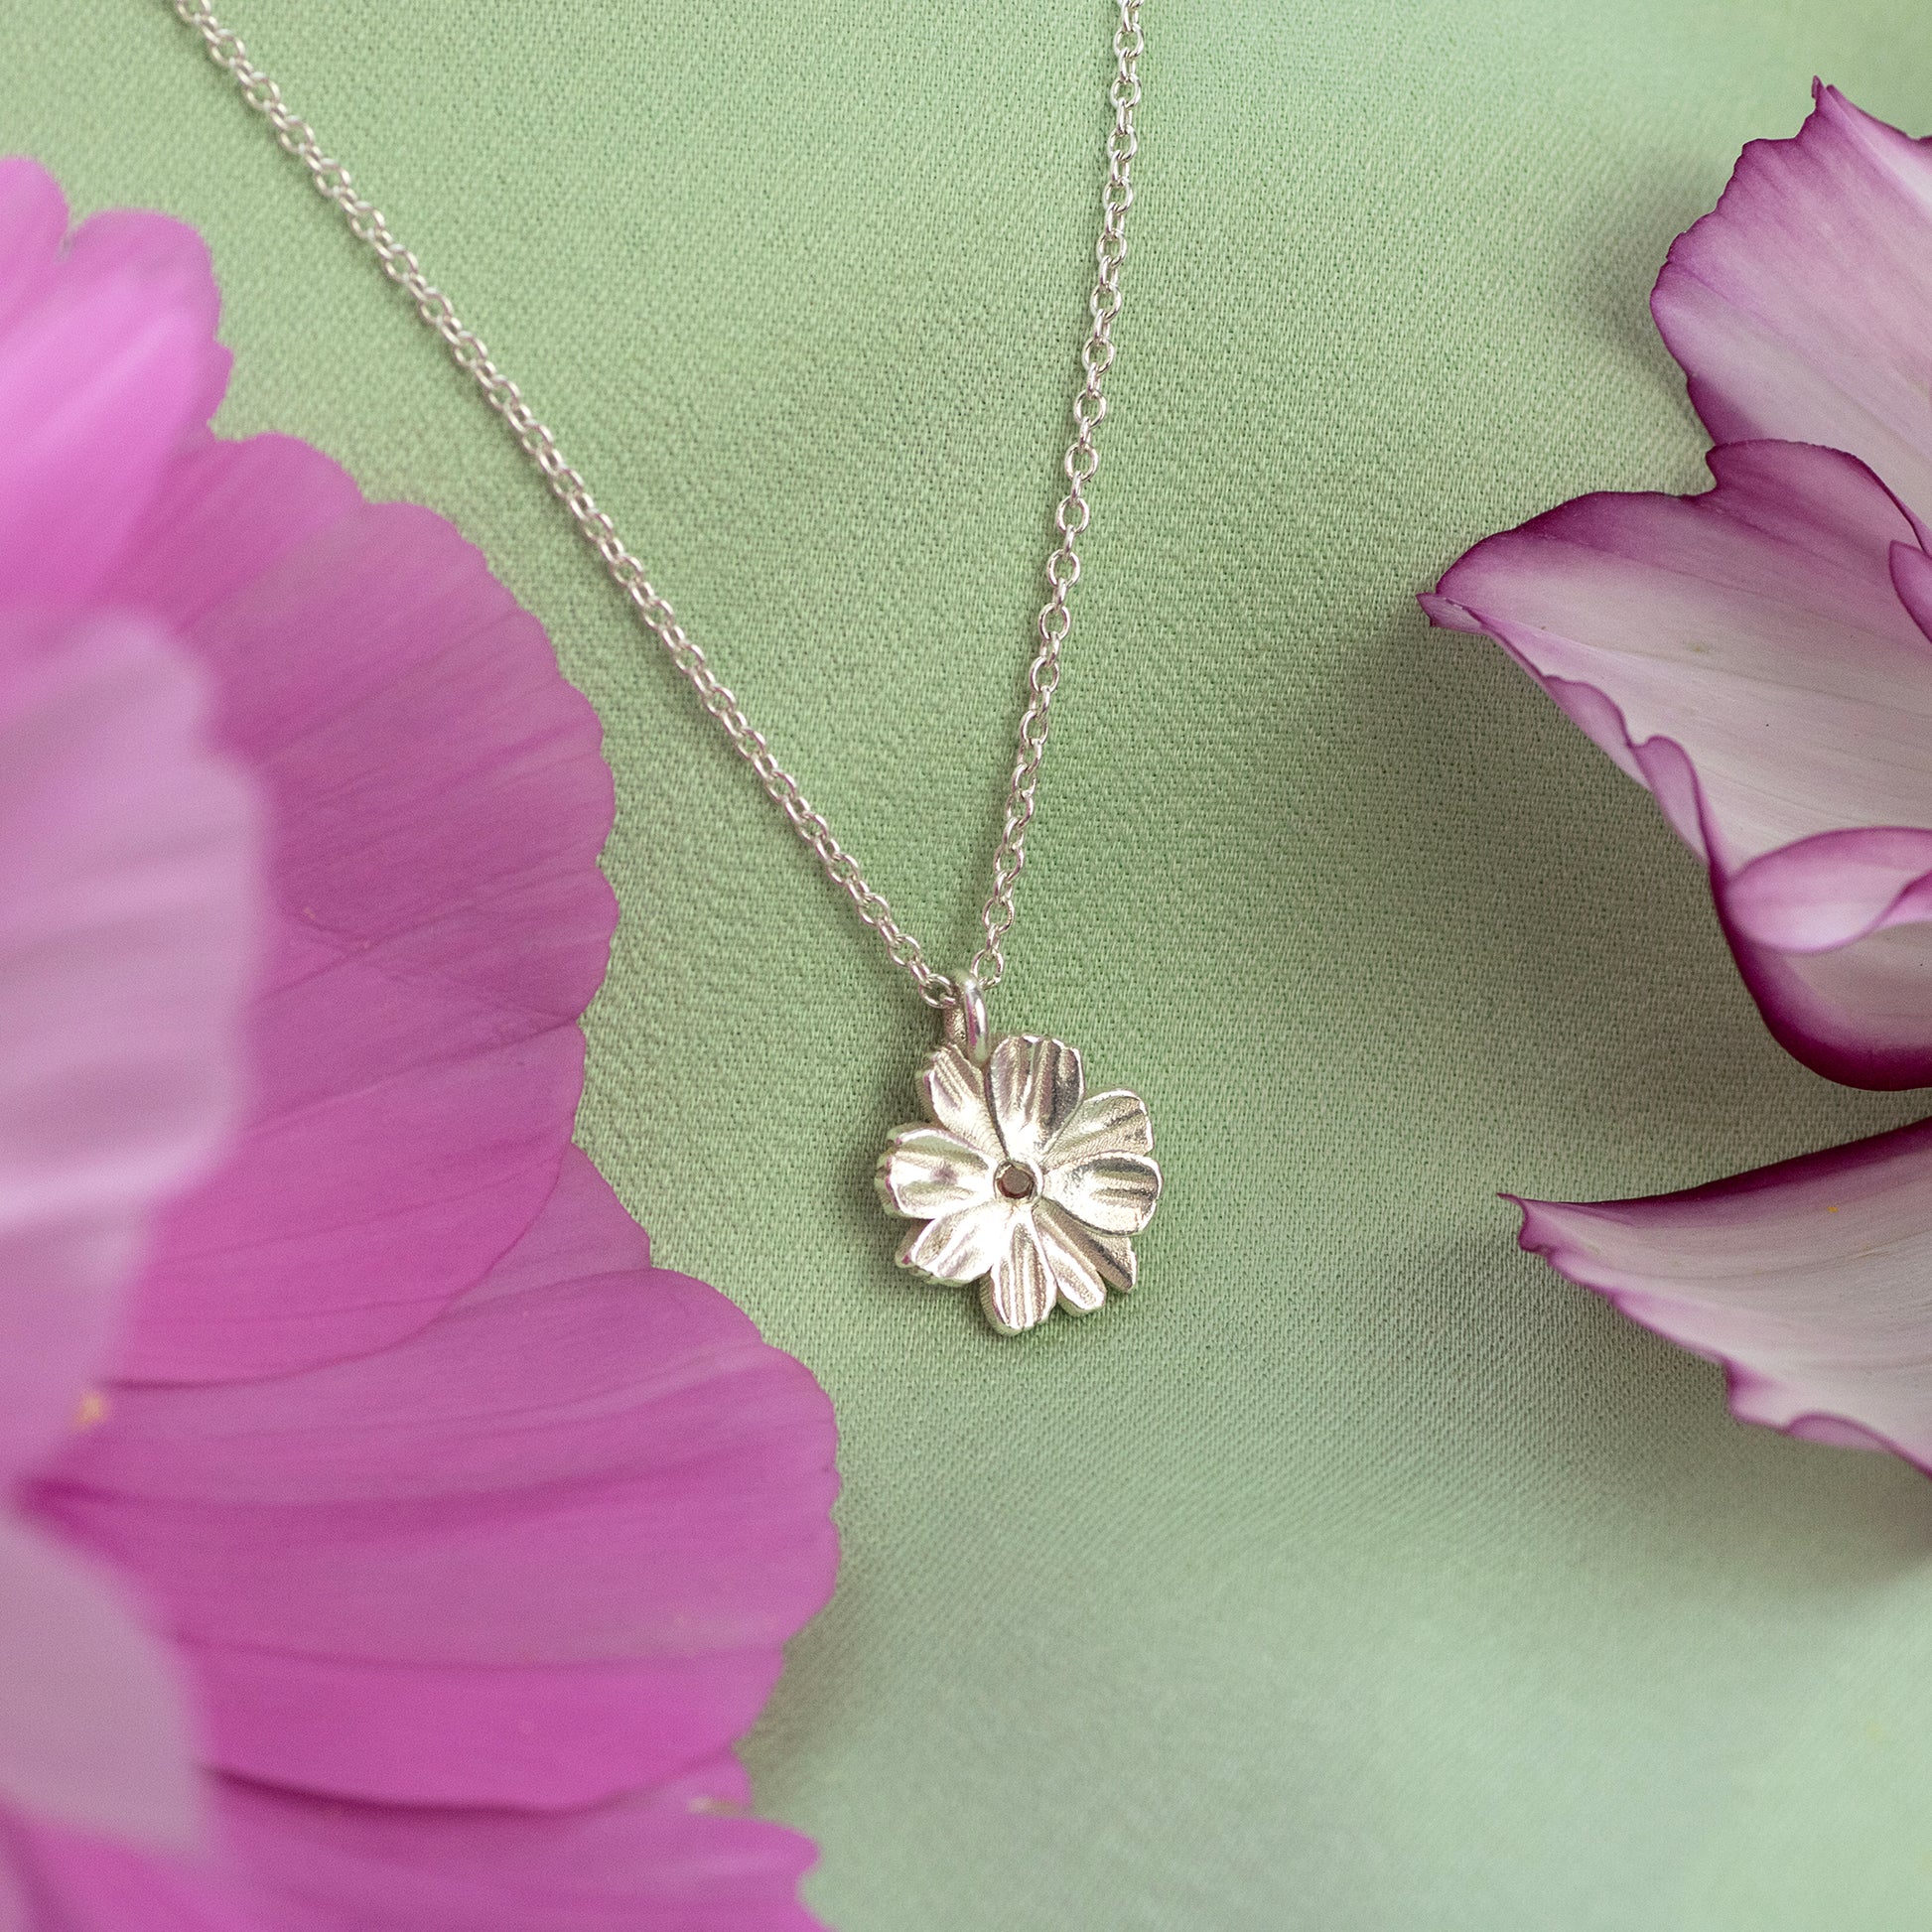 October Birth Flower & Birthstone Necklace - Silver